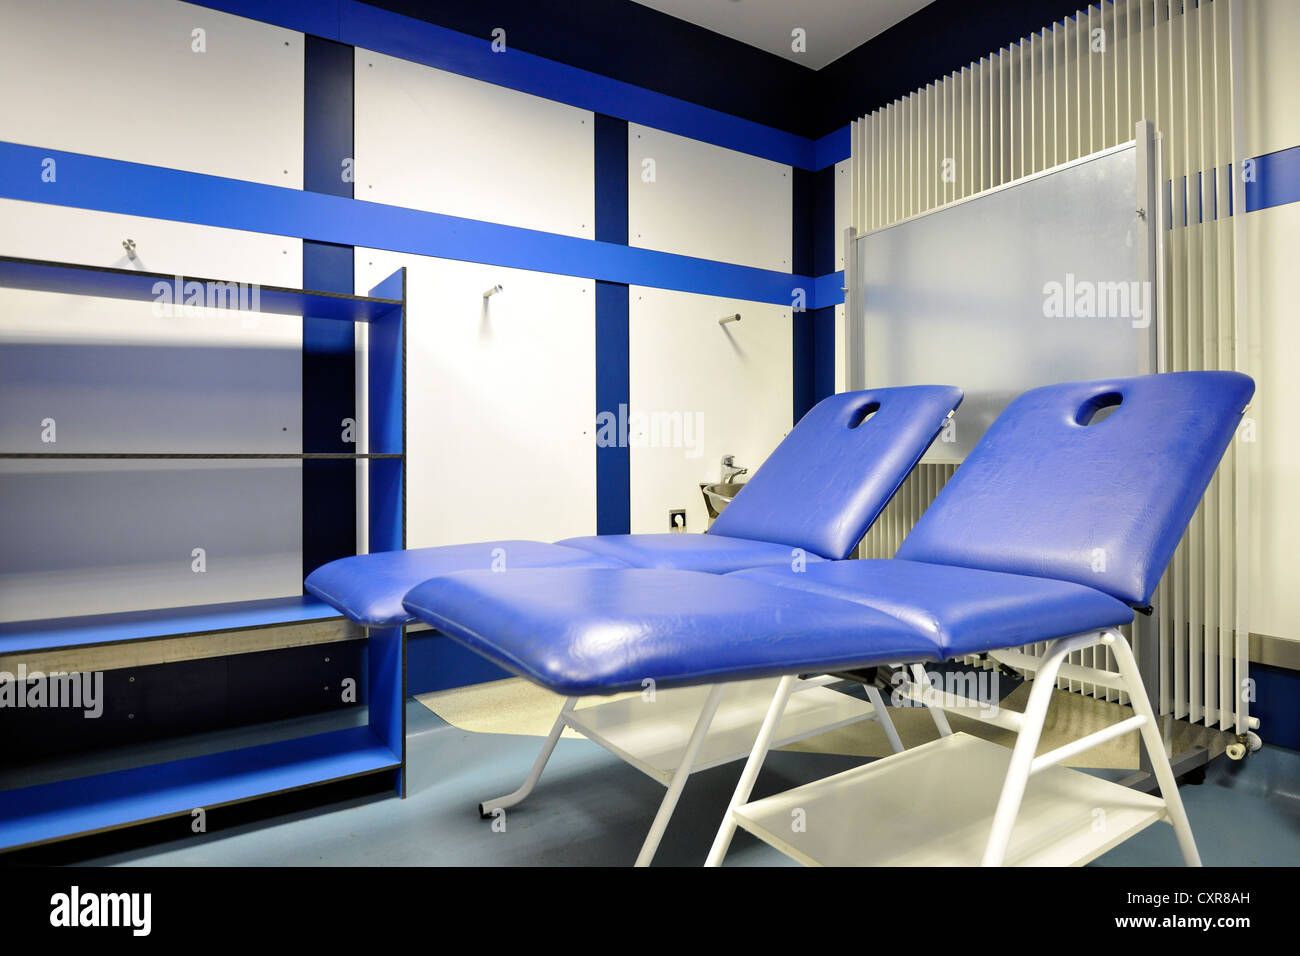 Physiotherapy room for the visiting team, locker room, Estadio Santiago Bernabeu stadium, football venue of Real Madrid Stock Photo